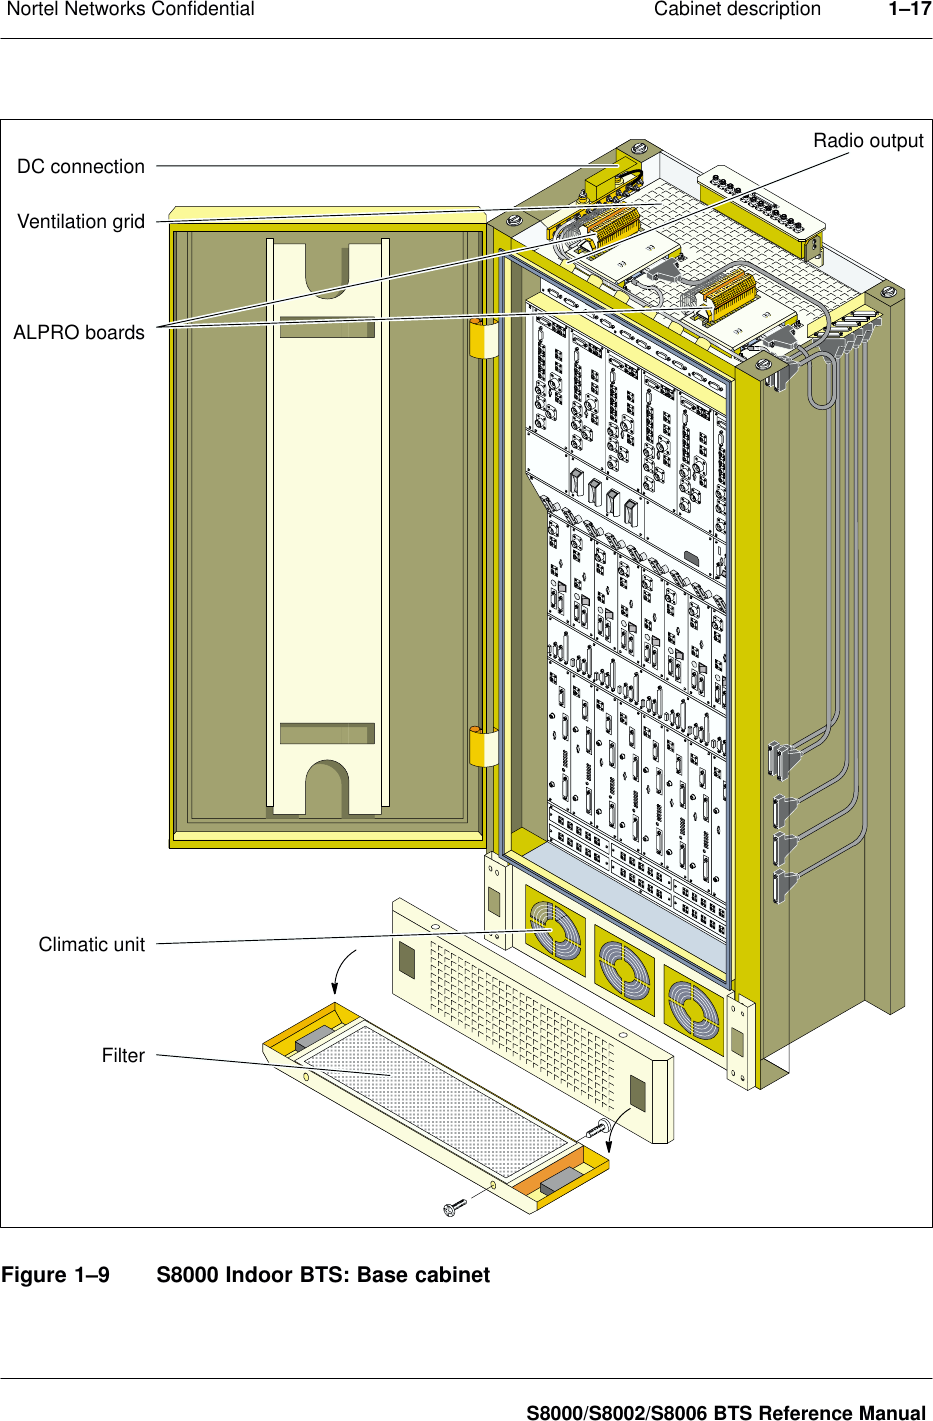 Cabinet descriptionNortel Networks Confidential 1–17S8000/S8002/S8006 BTS Reference ManualDC connectionFilterVentilation gridRadio outputALPRO boardsClimatic unitFigure 1–9 S8000 Indoor BTS: Base cabinet